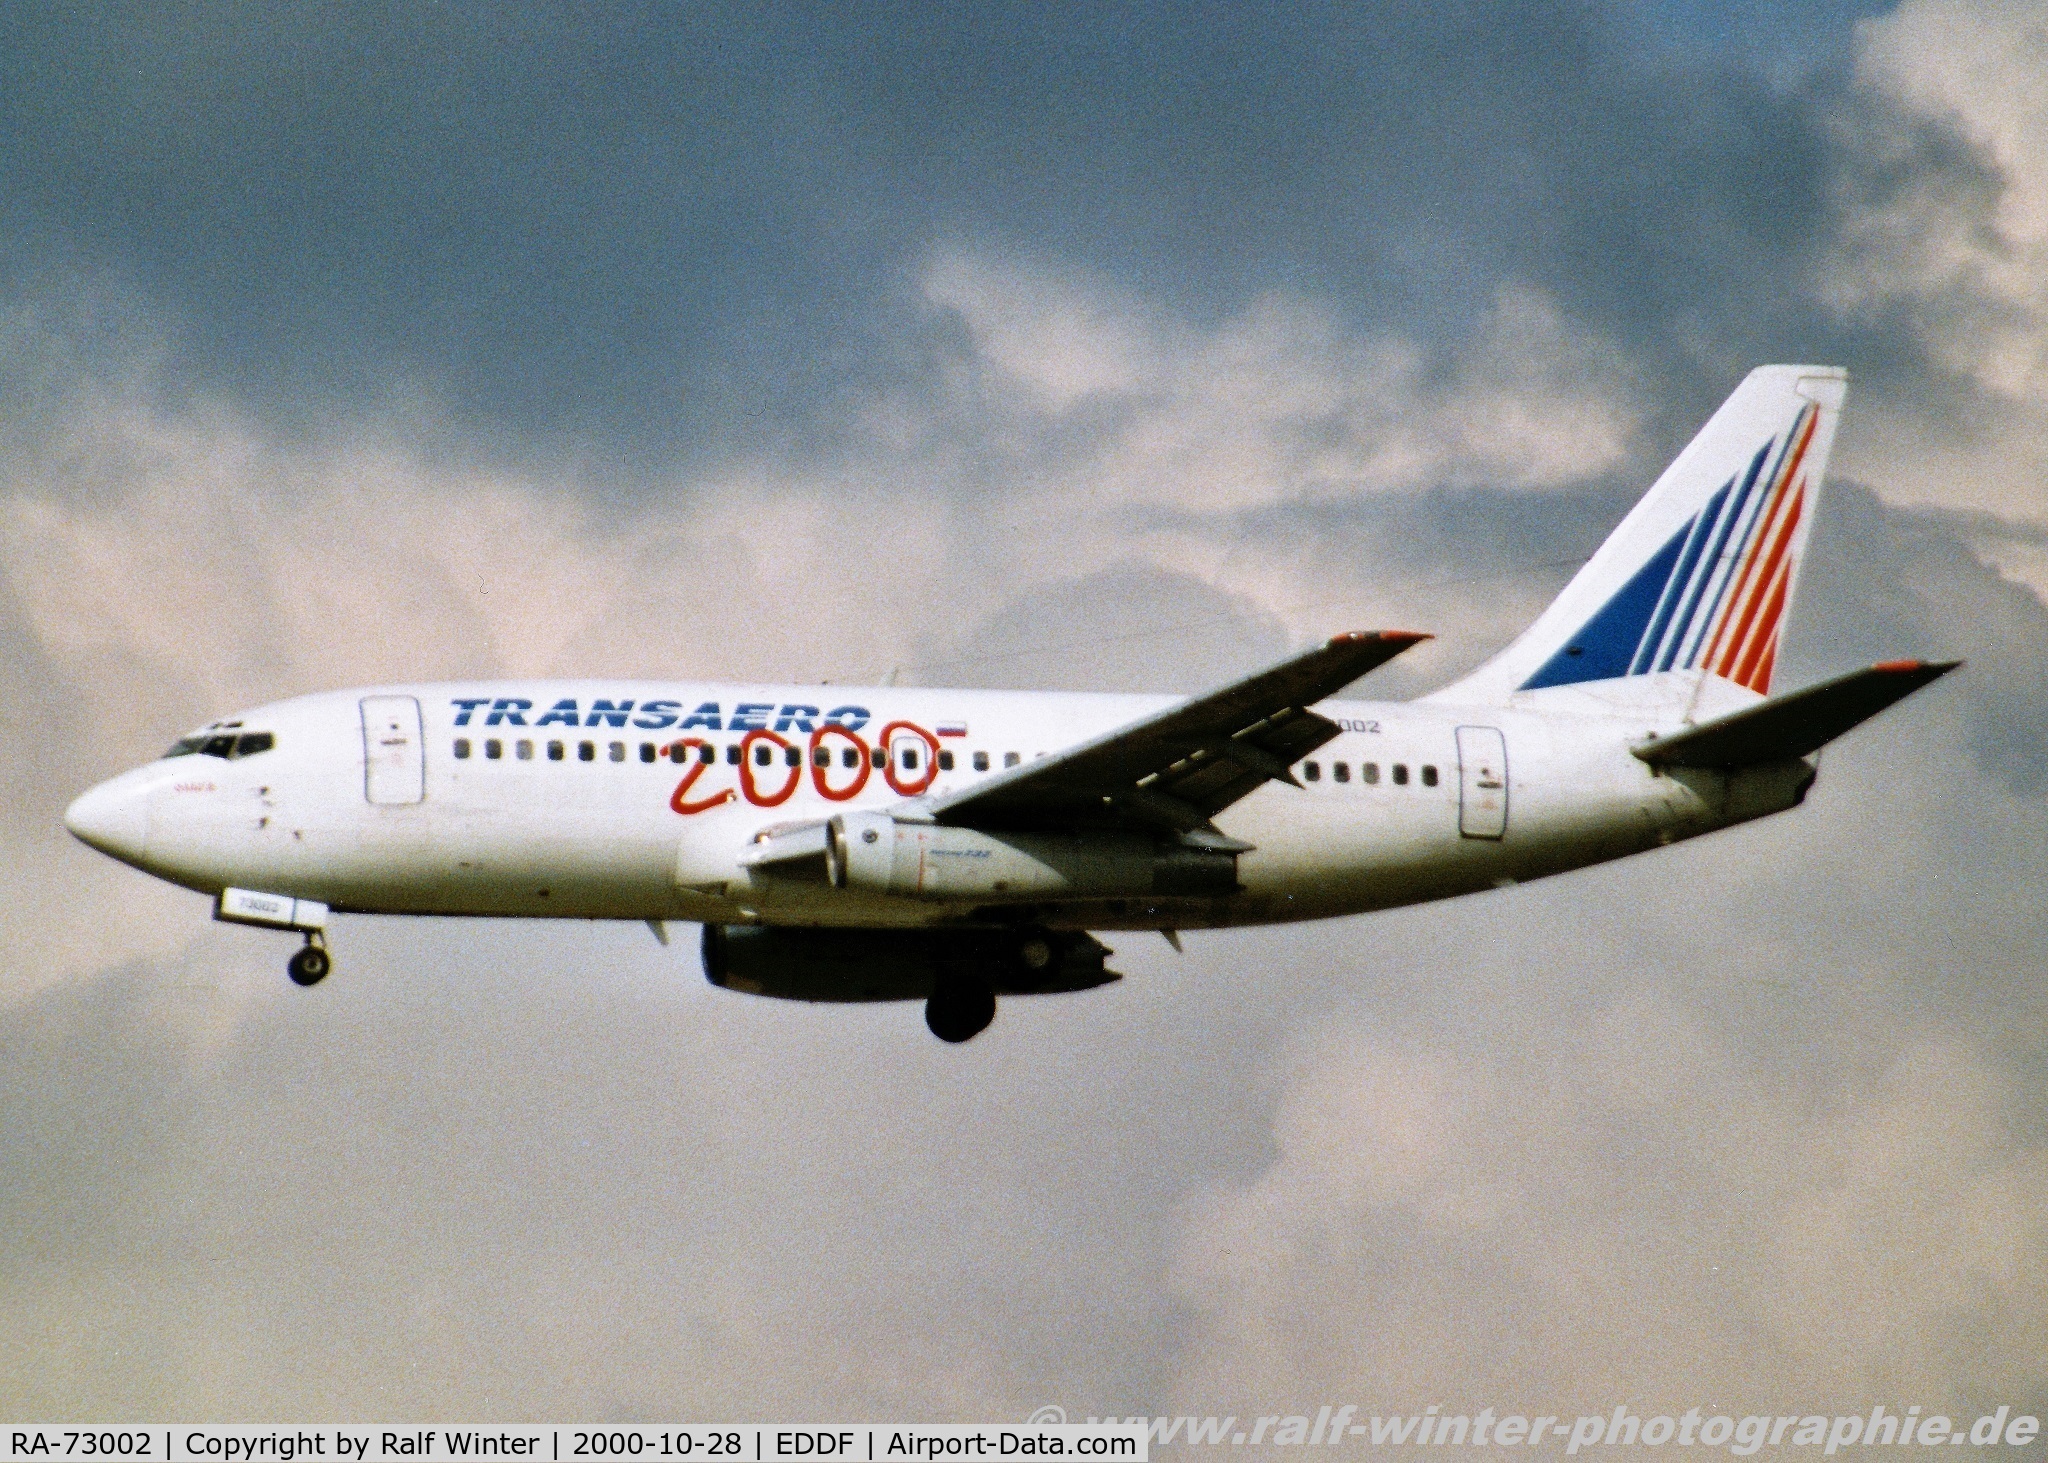 RA-73002, 1998 Boeing 737-5L9 C/N 28997, Boeing 737-236 - UN TSO Transaero Airlines '2000' - 22034 - RA-73002 - 10.2000 - FRA